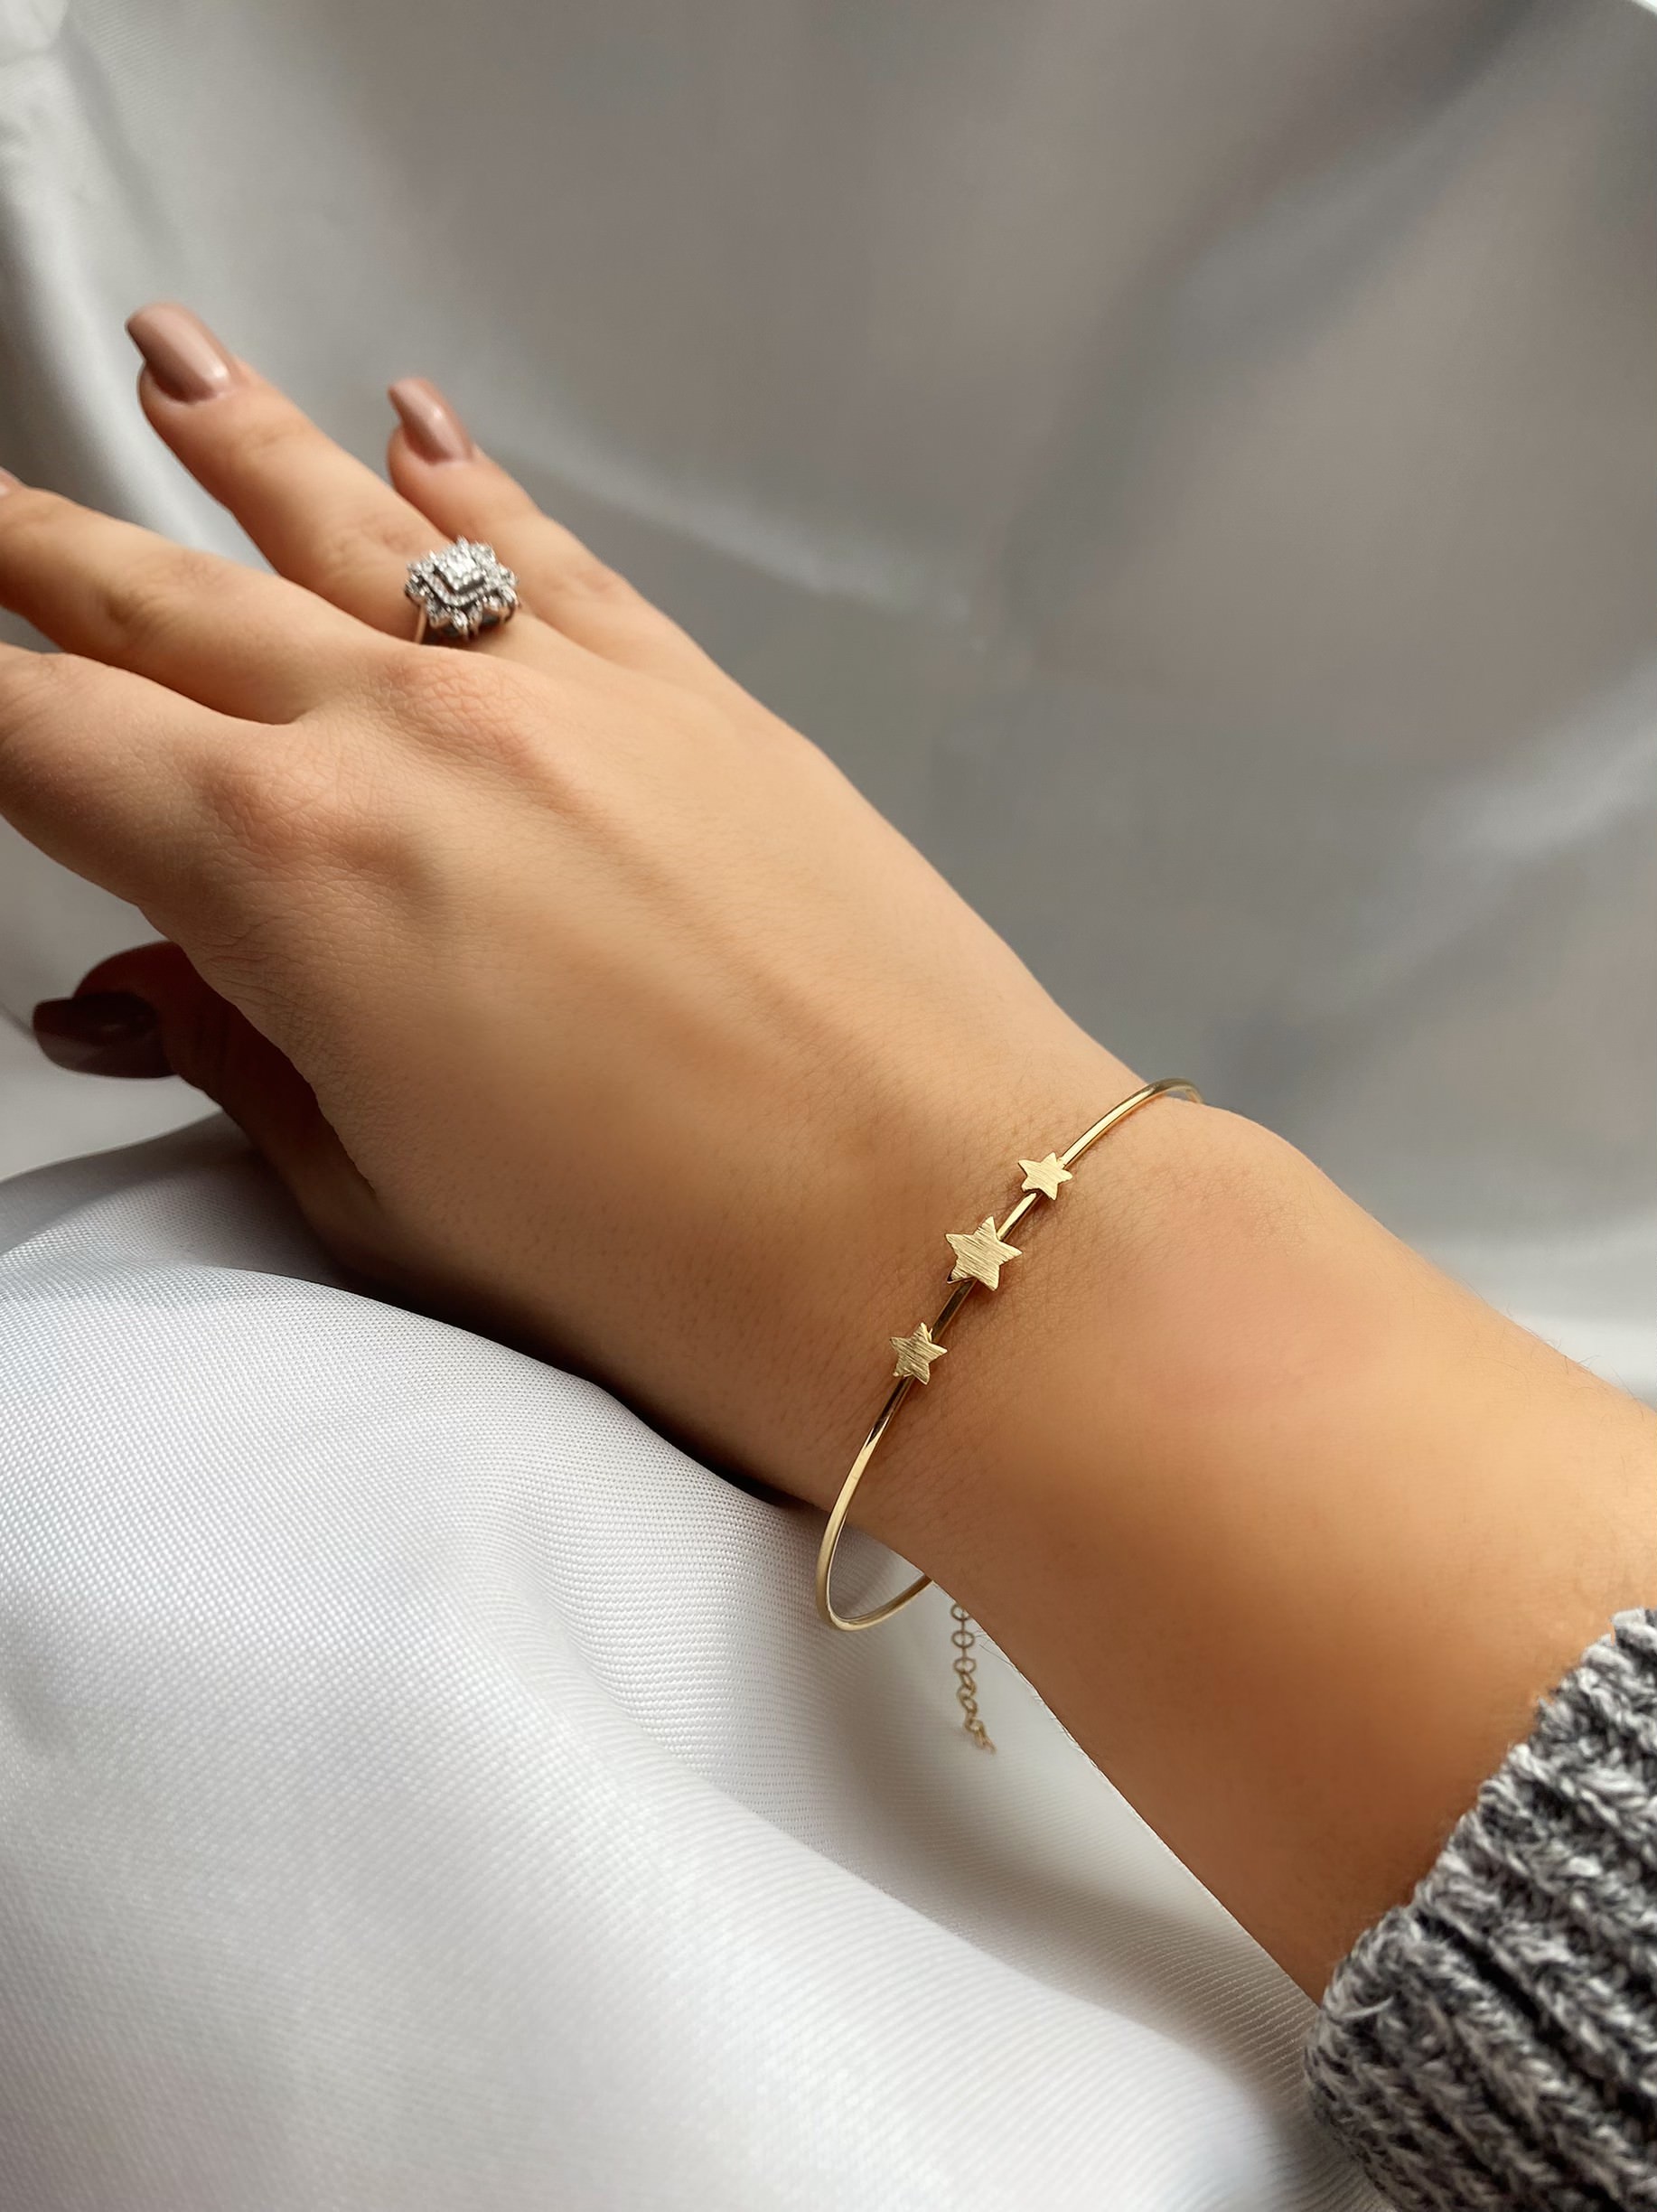 14 Carat Gold 3 Star Bracelet